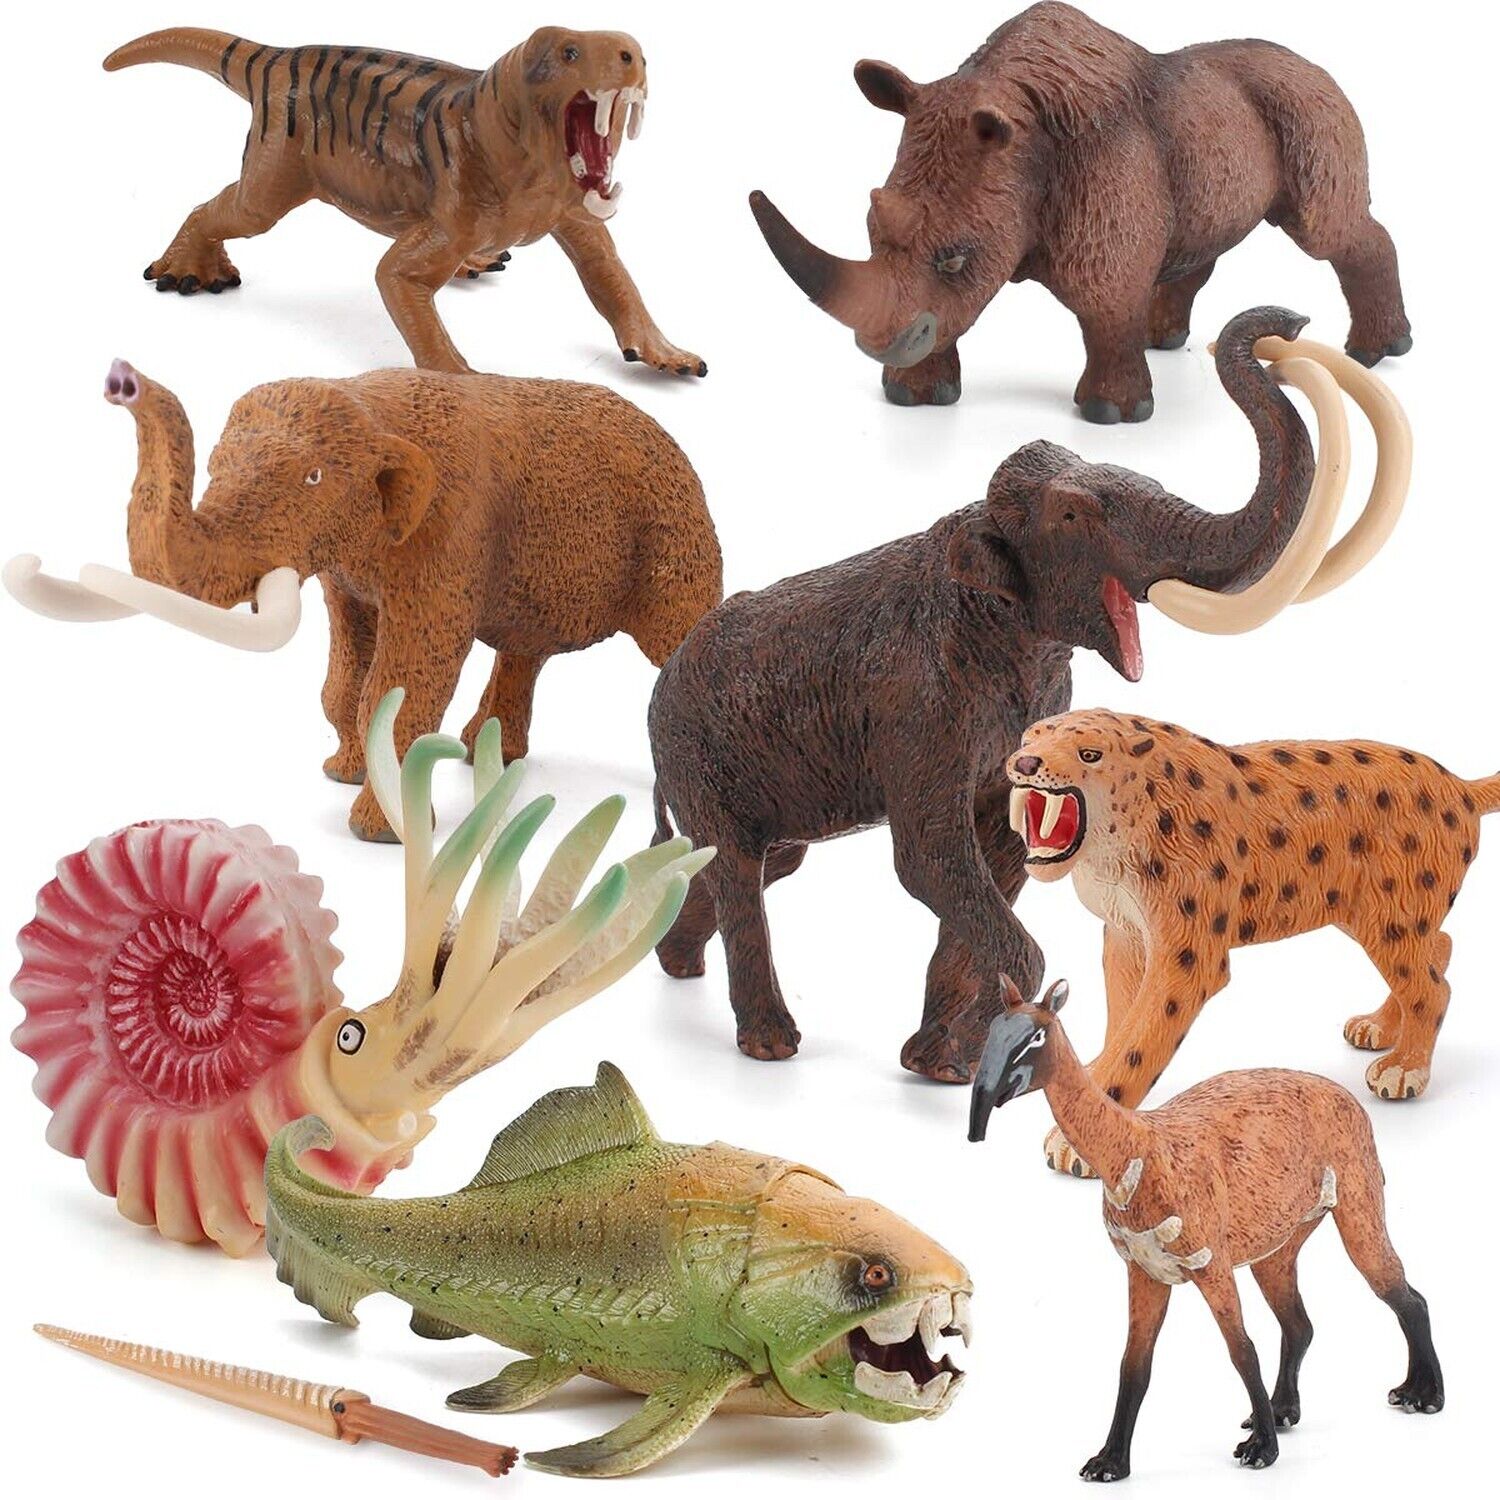 Fantarea 9 PCS Prehistoric Animal Model Figures Ancient Smilodon Mammoth Figu...